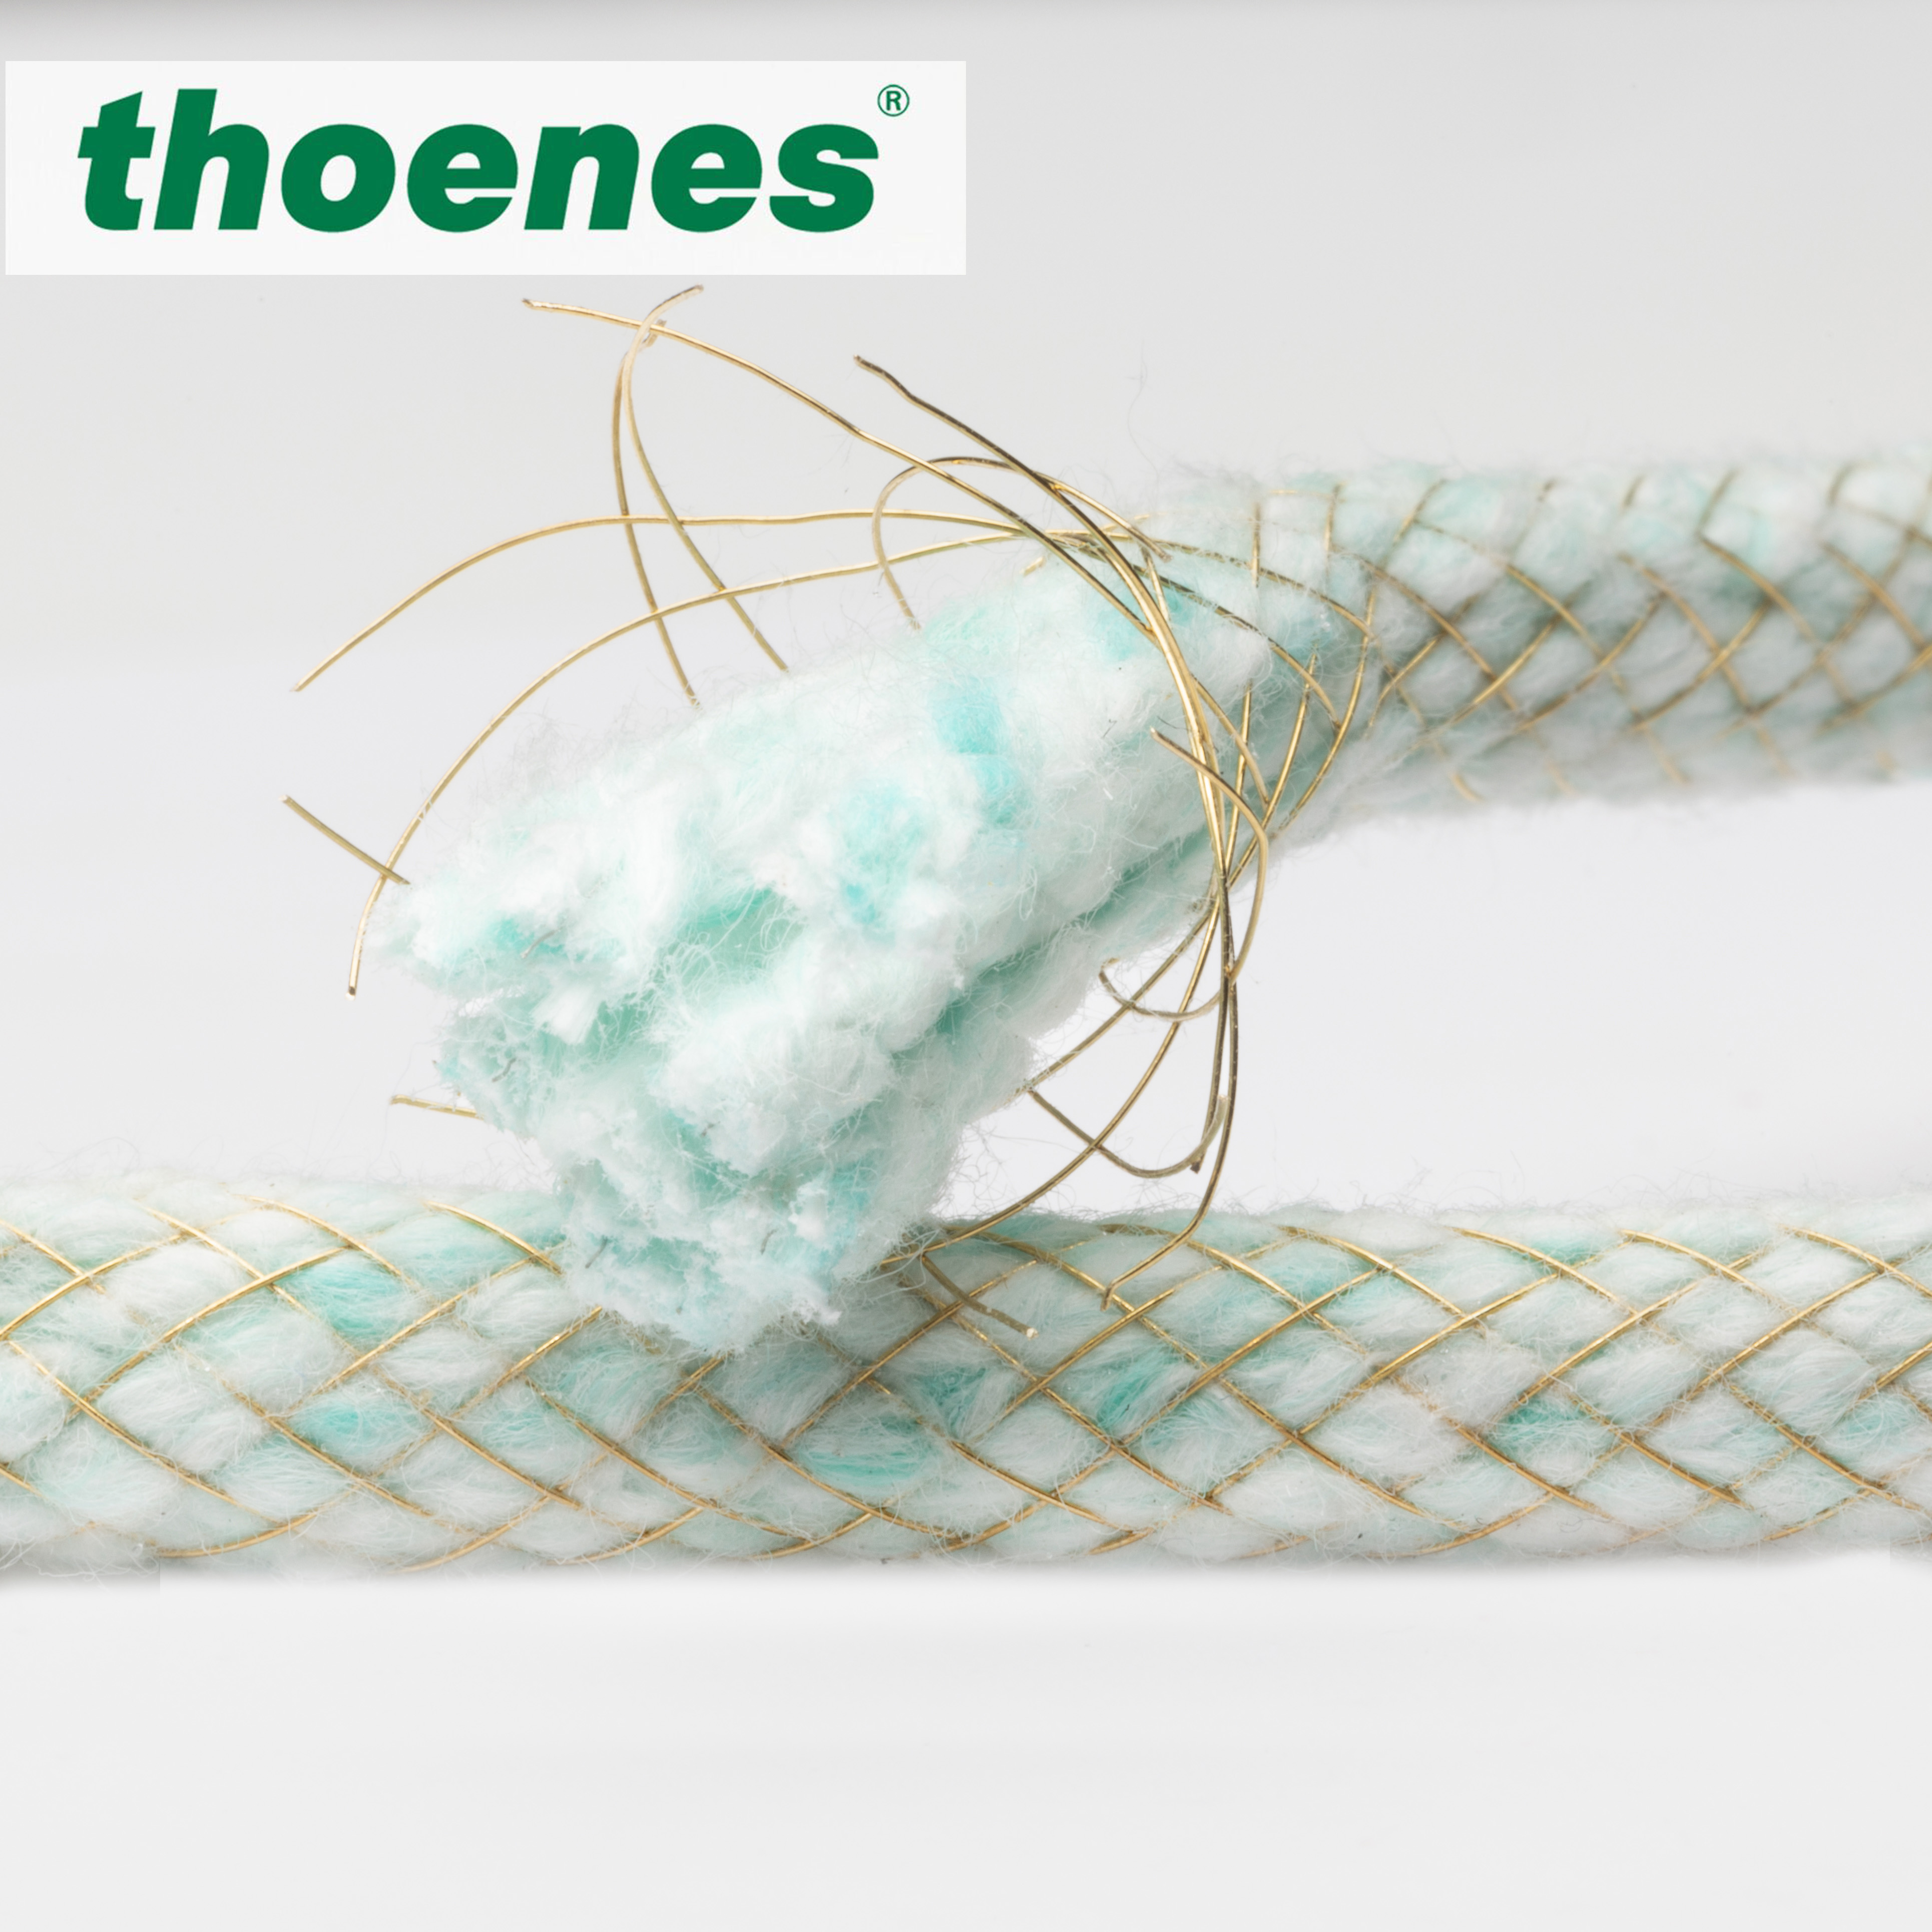 thoenes® K275 - Ceramic fibre cord